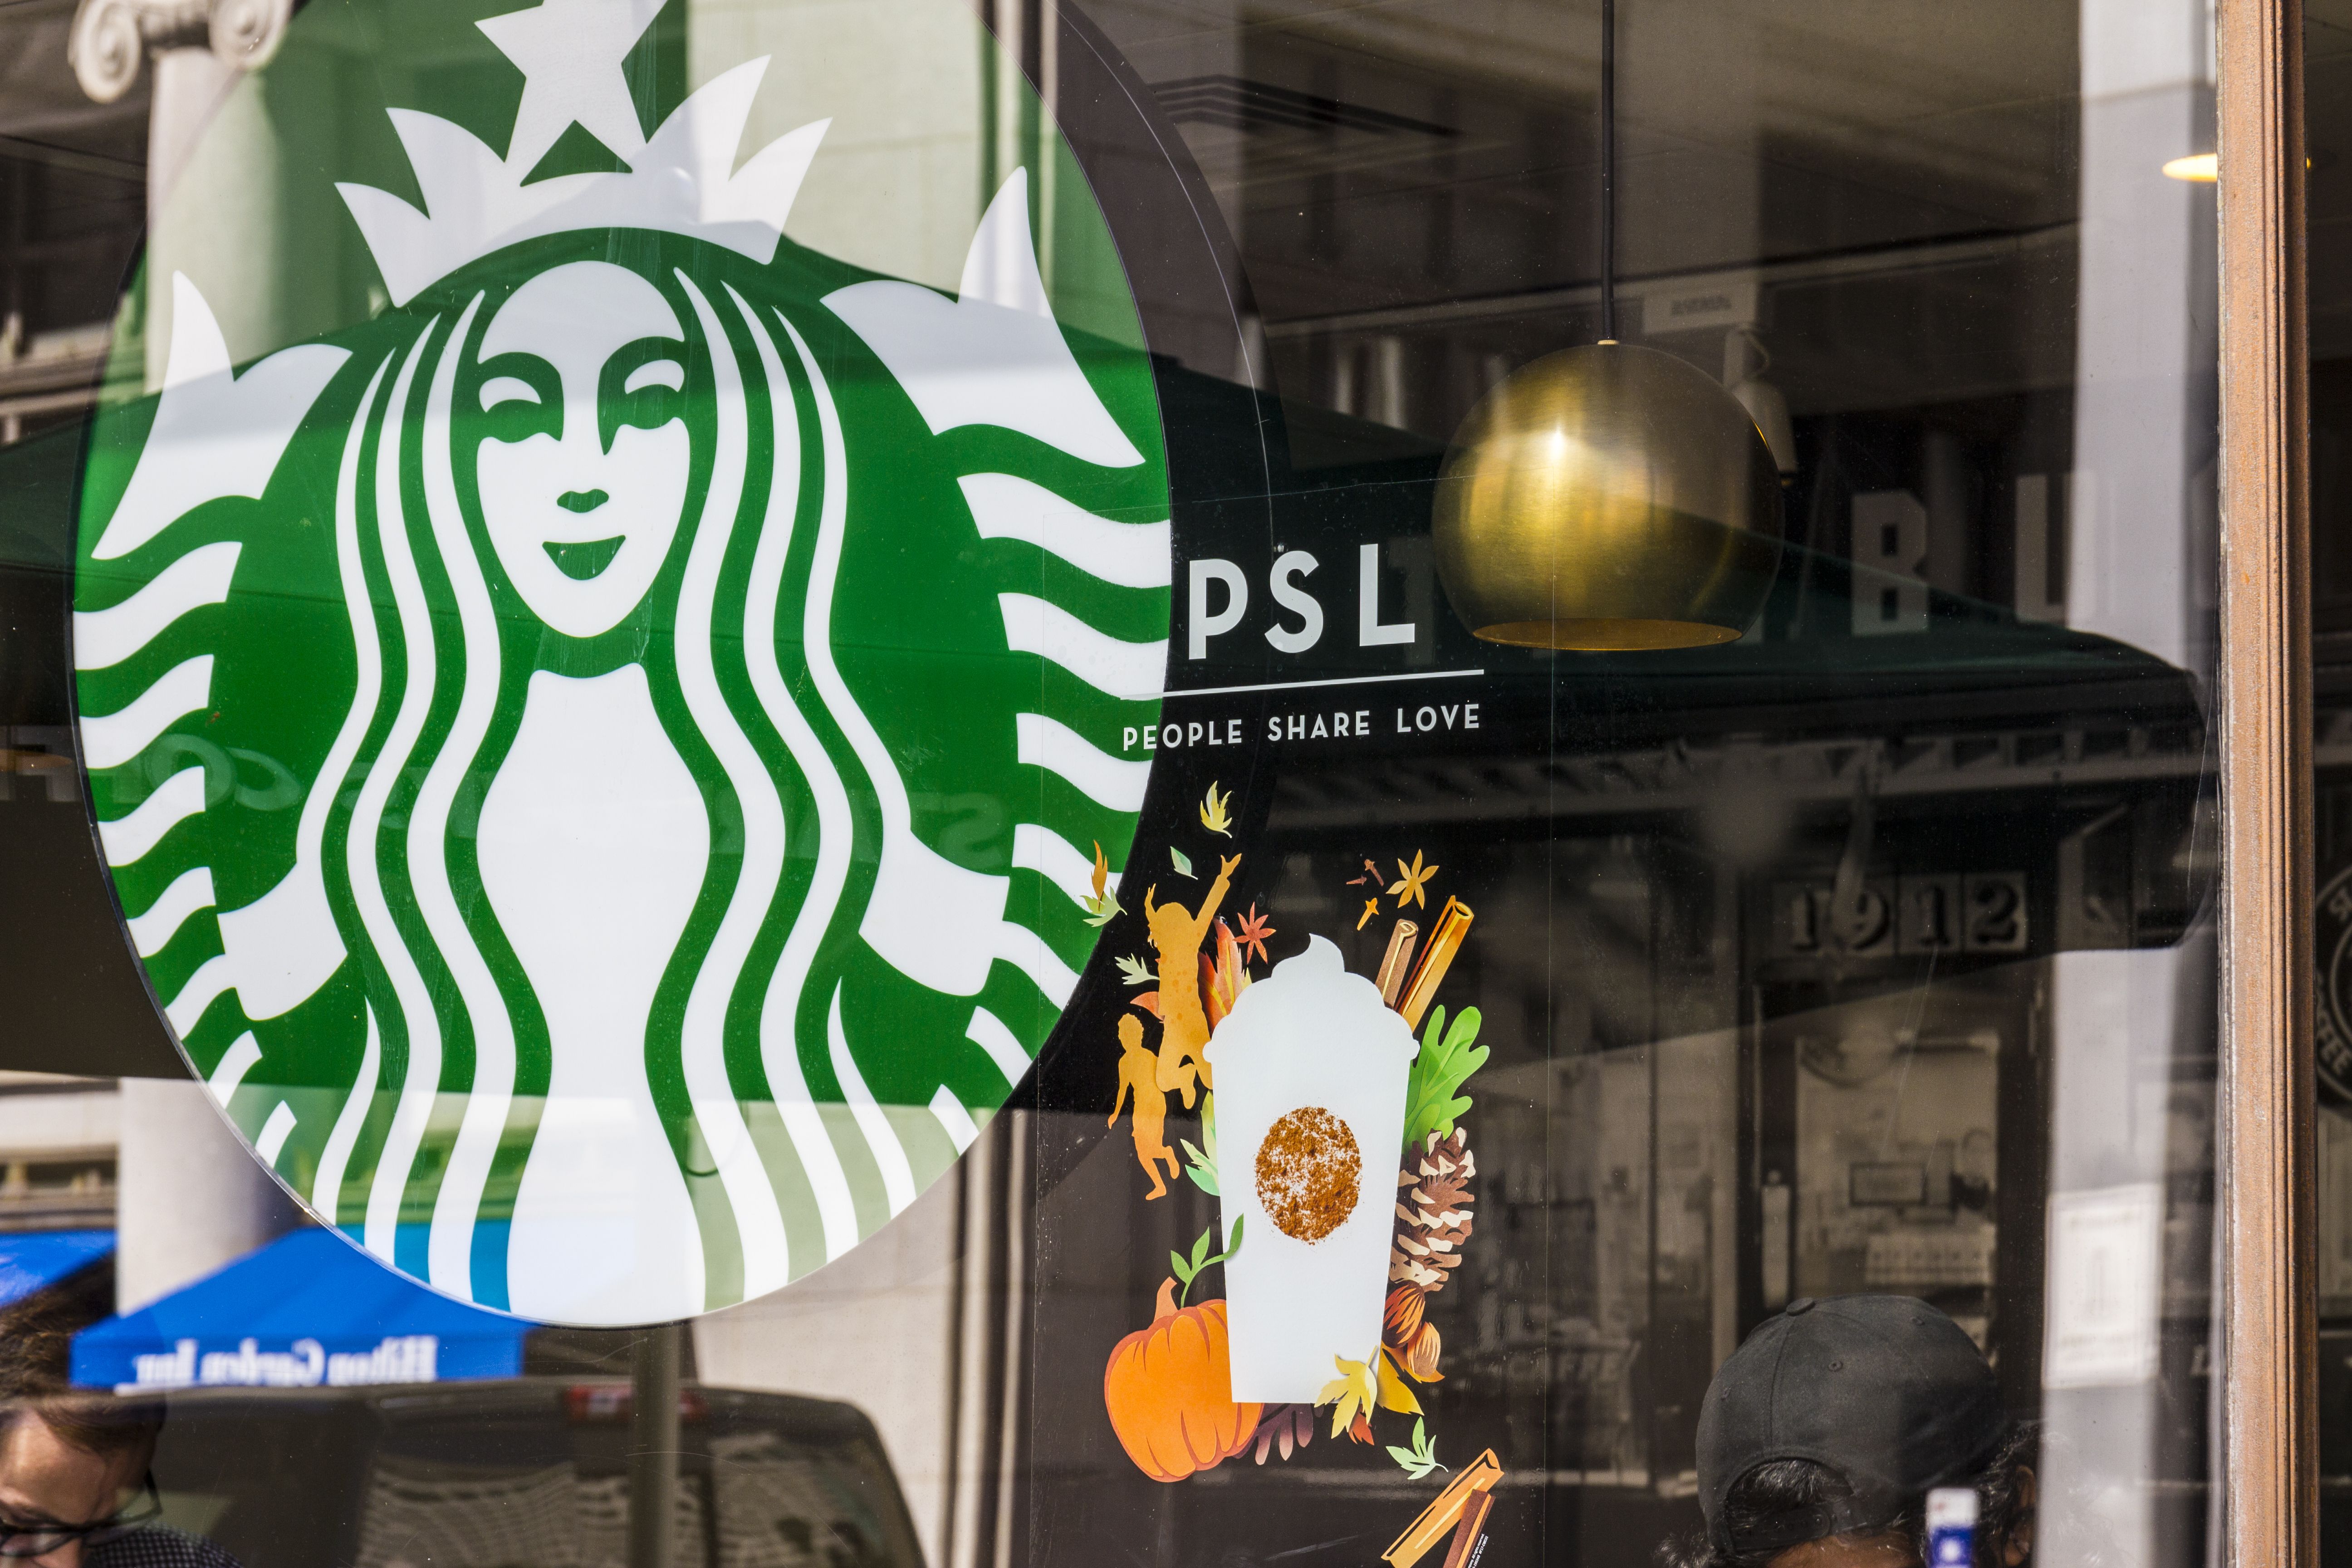 PSL sign on Starbucks coffeeshop window. 